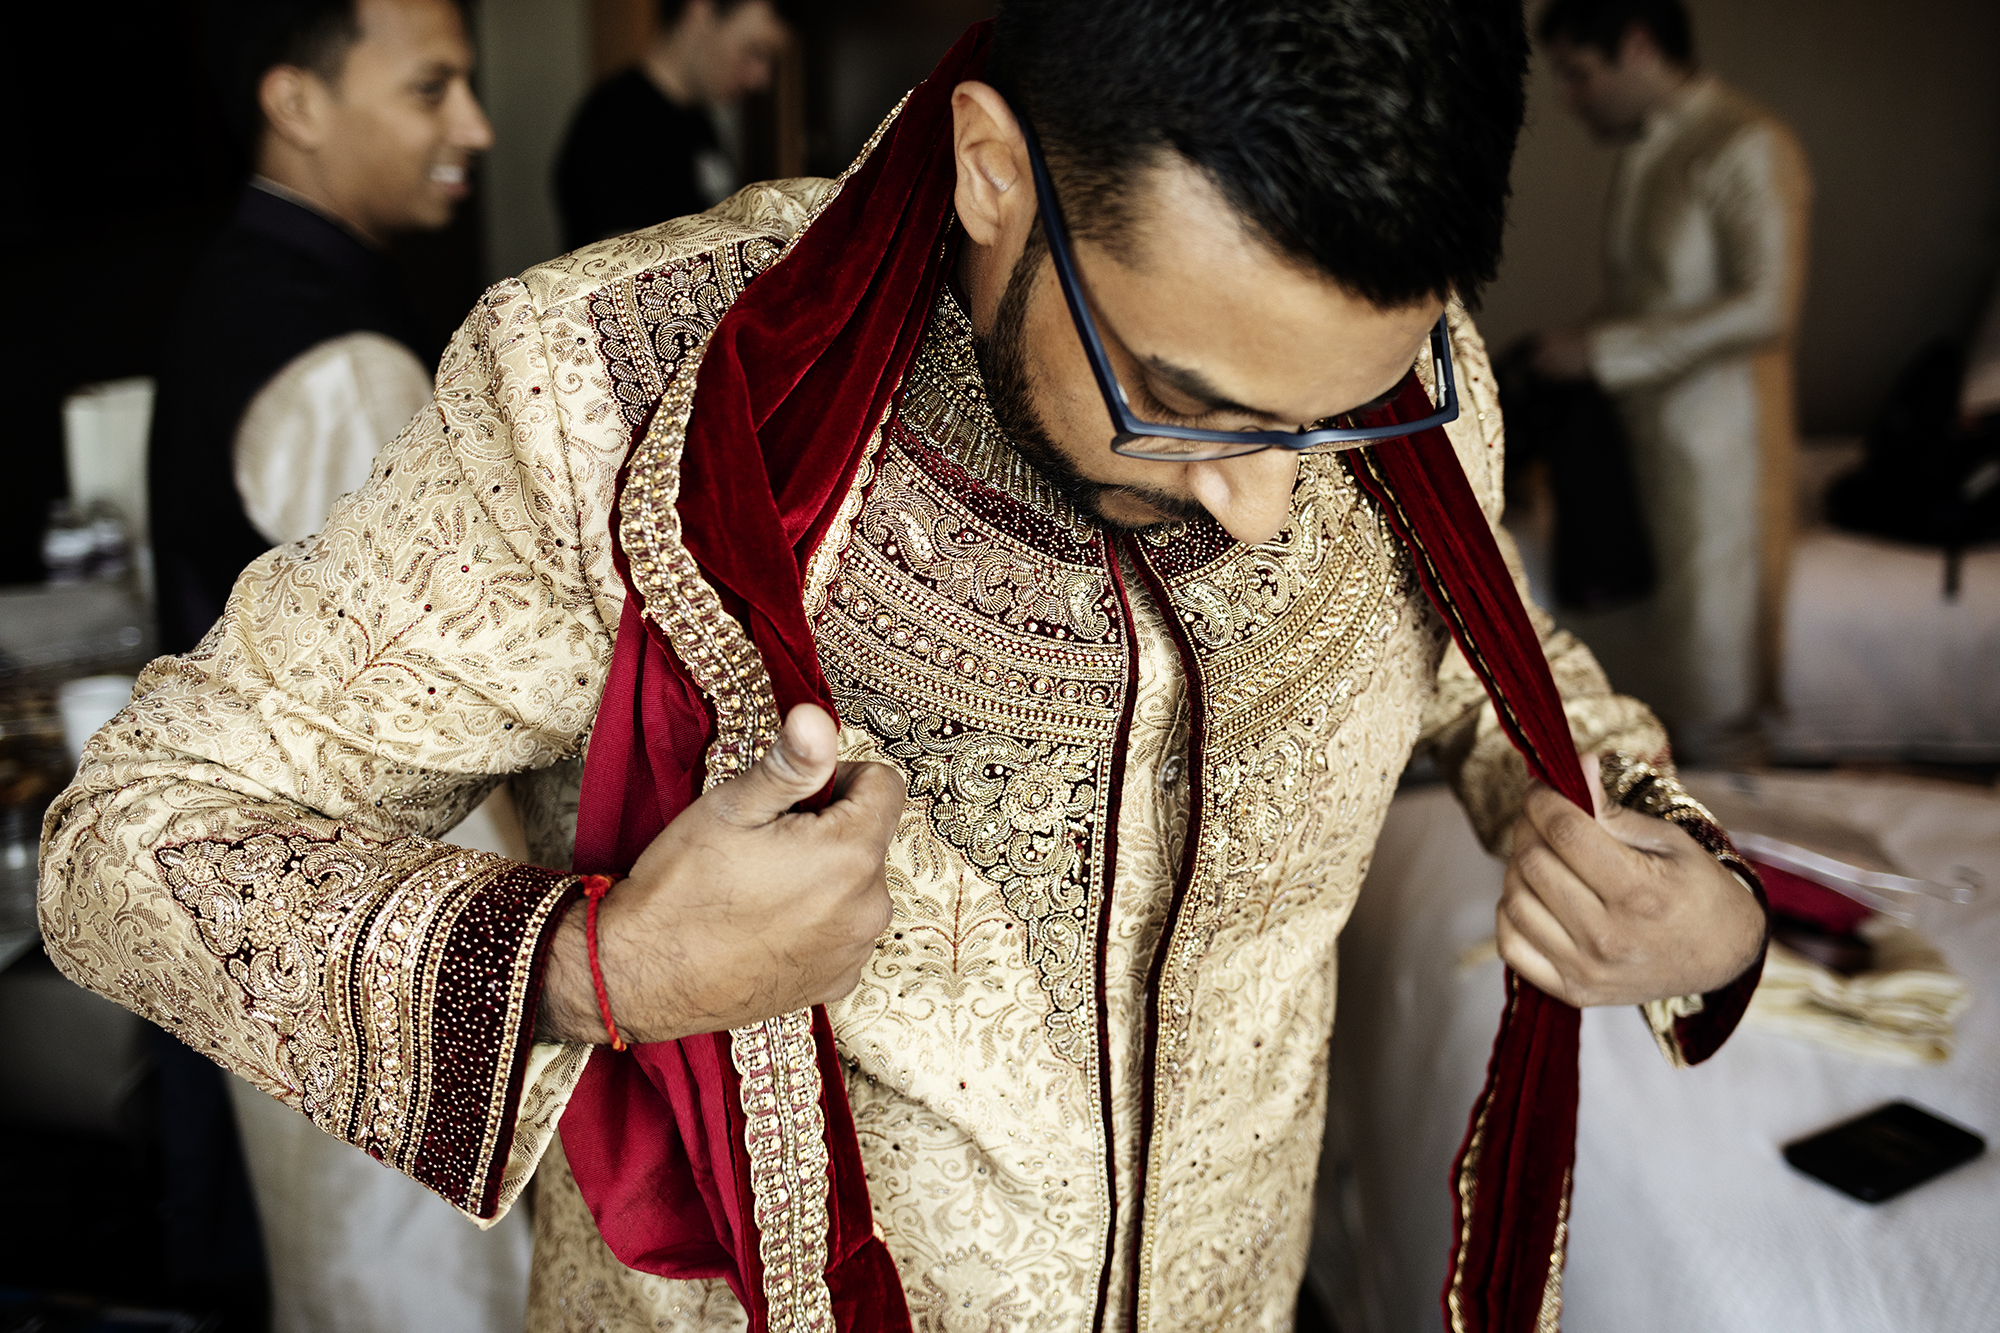 Groom's Indian Wedding Attire | Minneapolis Wedding Photos | Photography by Photogen Inc. | Eliesa Johnson | Luxury Wedding Photography Based in Minnesota